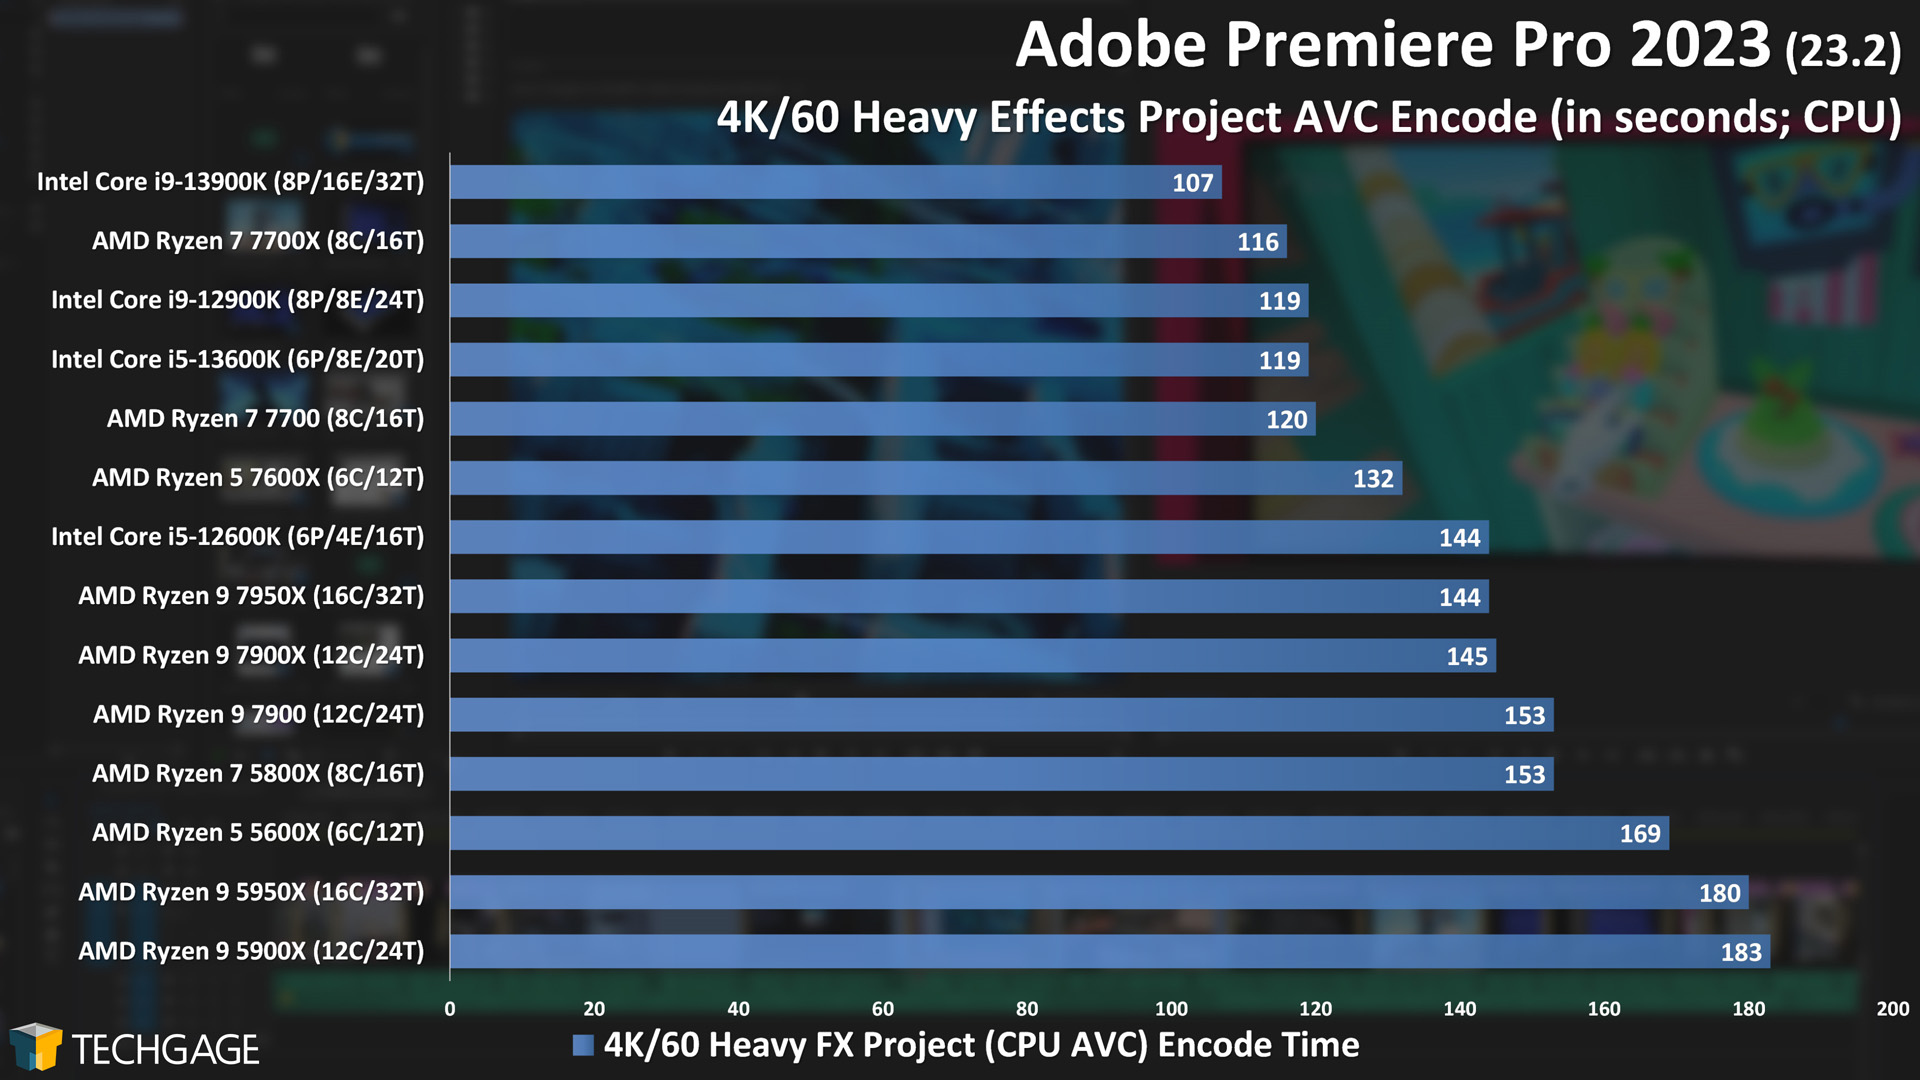 Adobe Premiere Pro - CPU Encoding Performance (4K60 Heavy Effects)